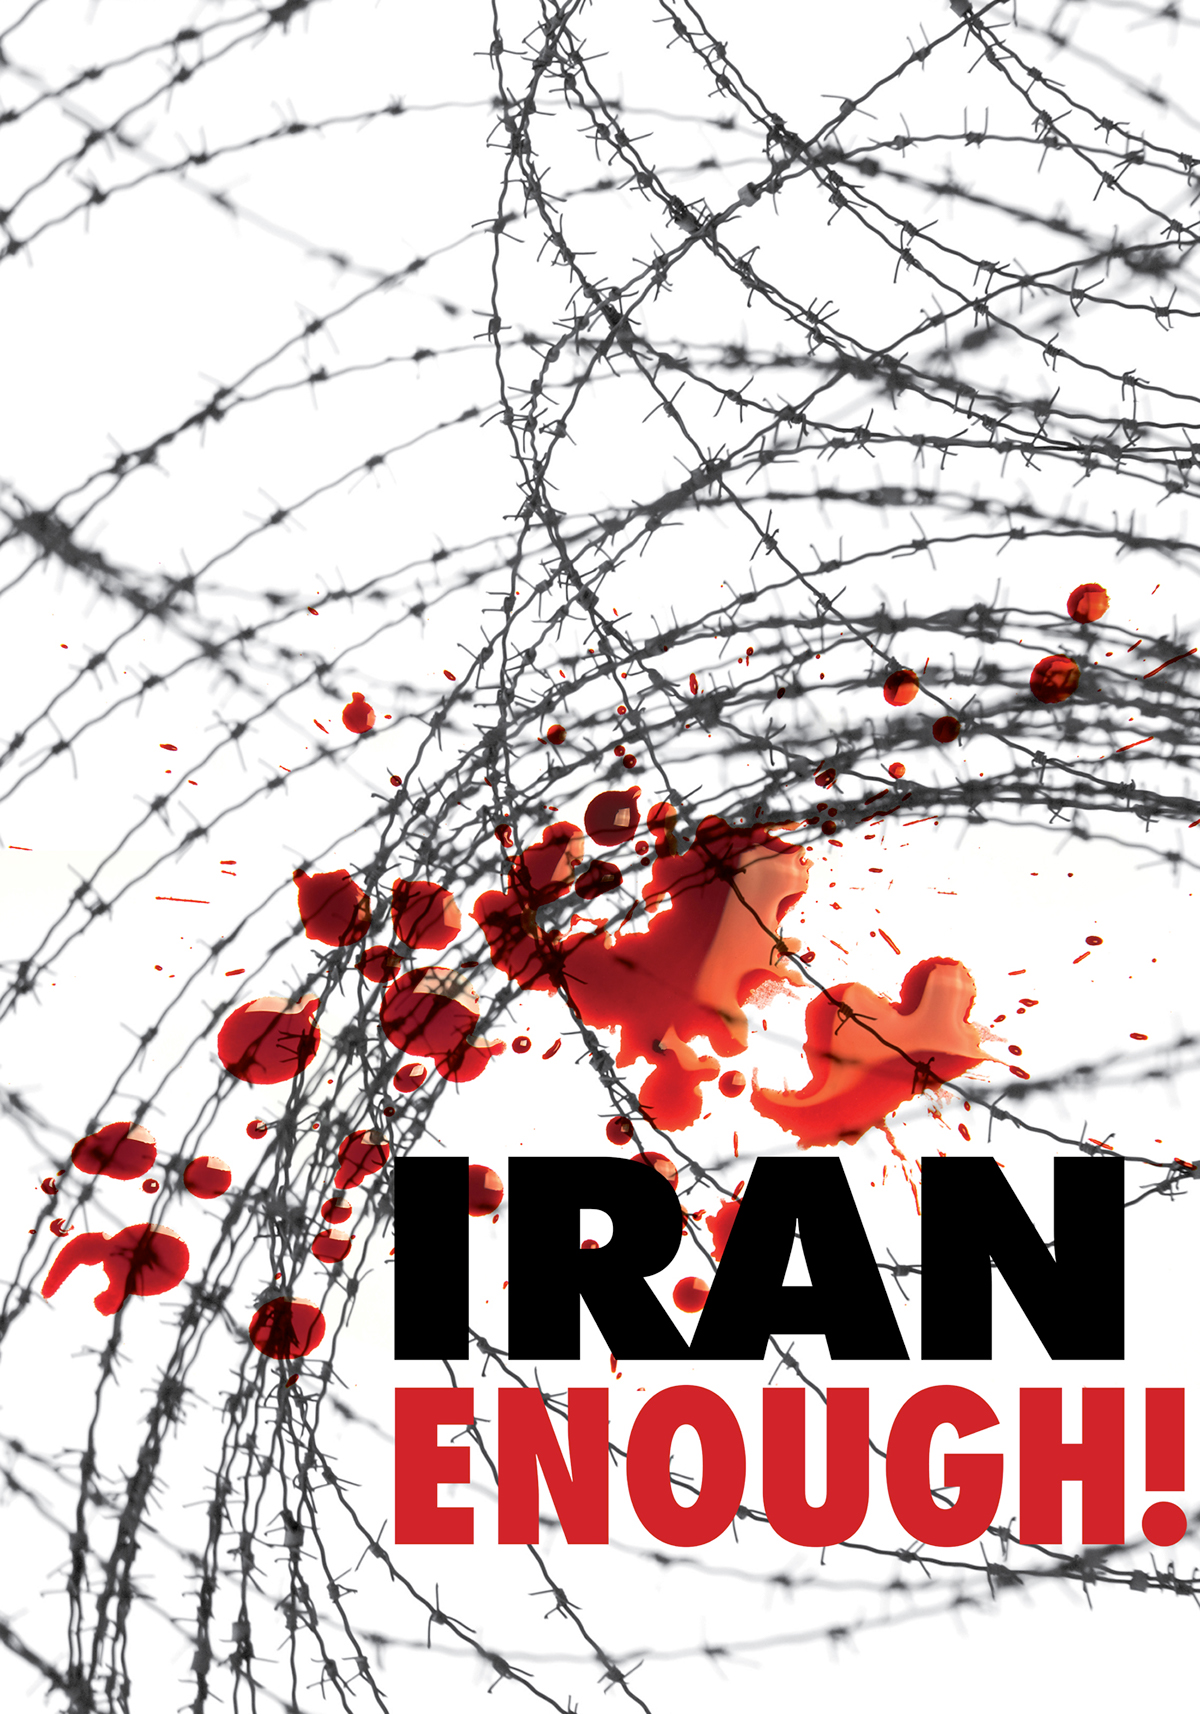 Iran  iranian  persian  baha'i   persecution  Prison  education  denial  human rights  infants  Elderly  university Justice freedom